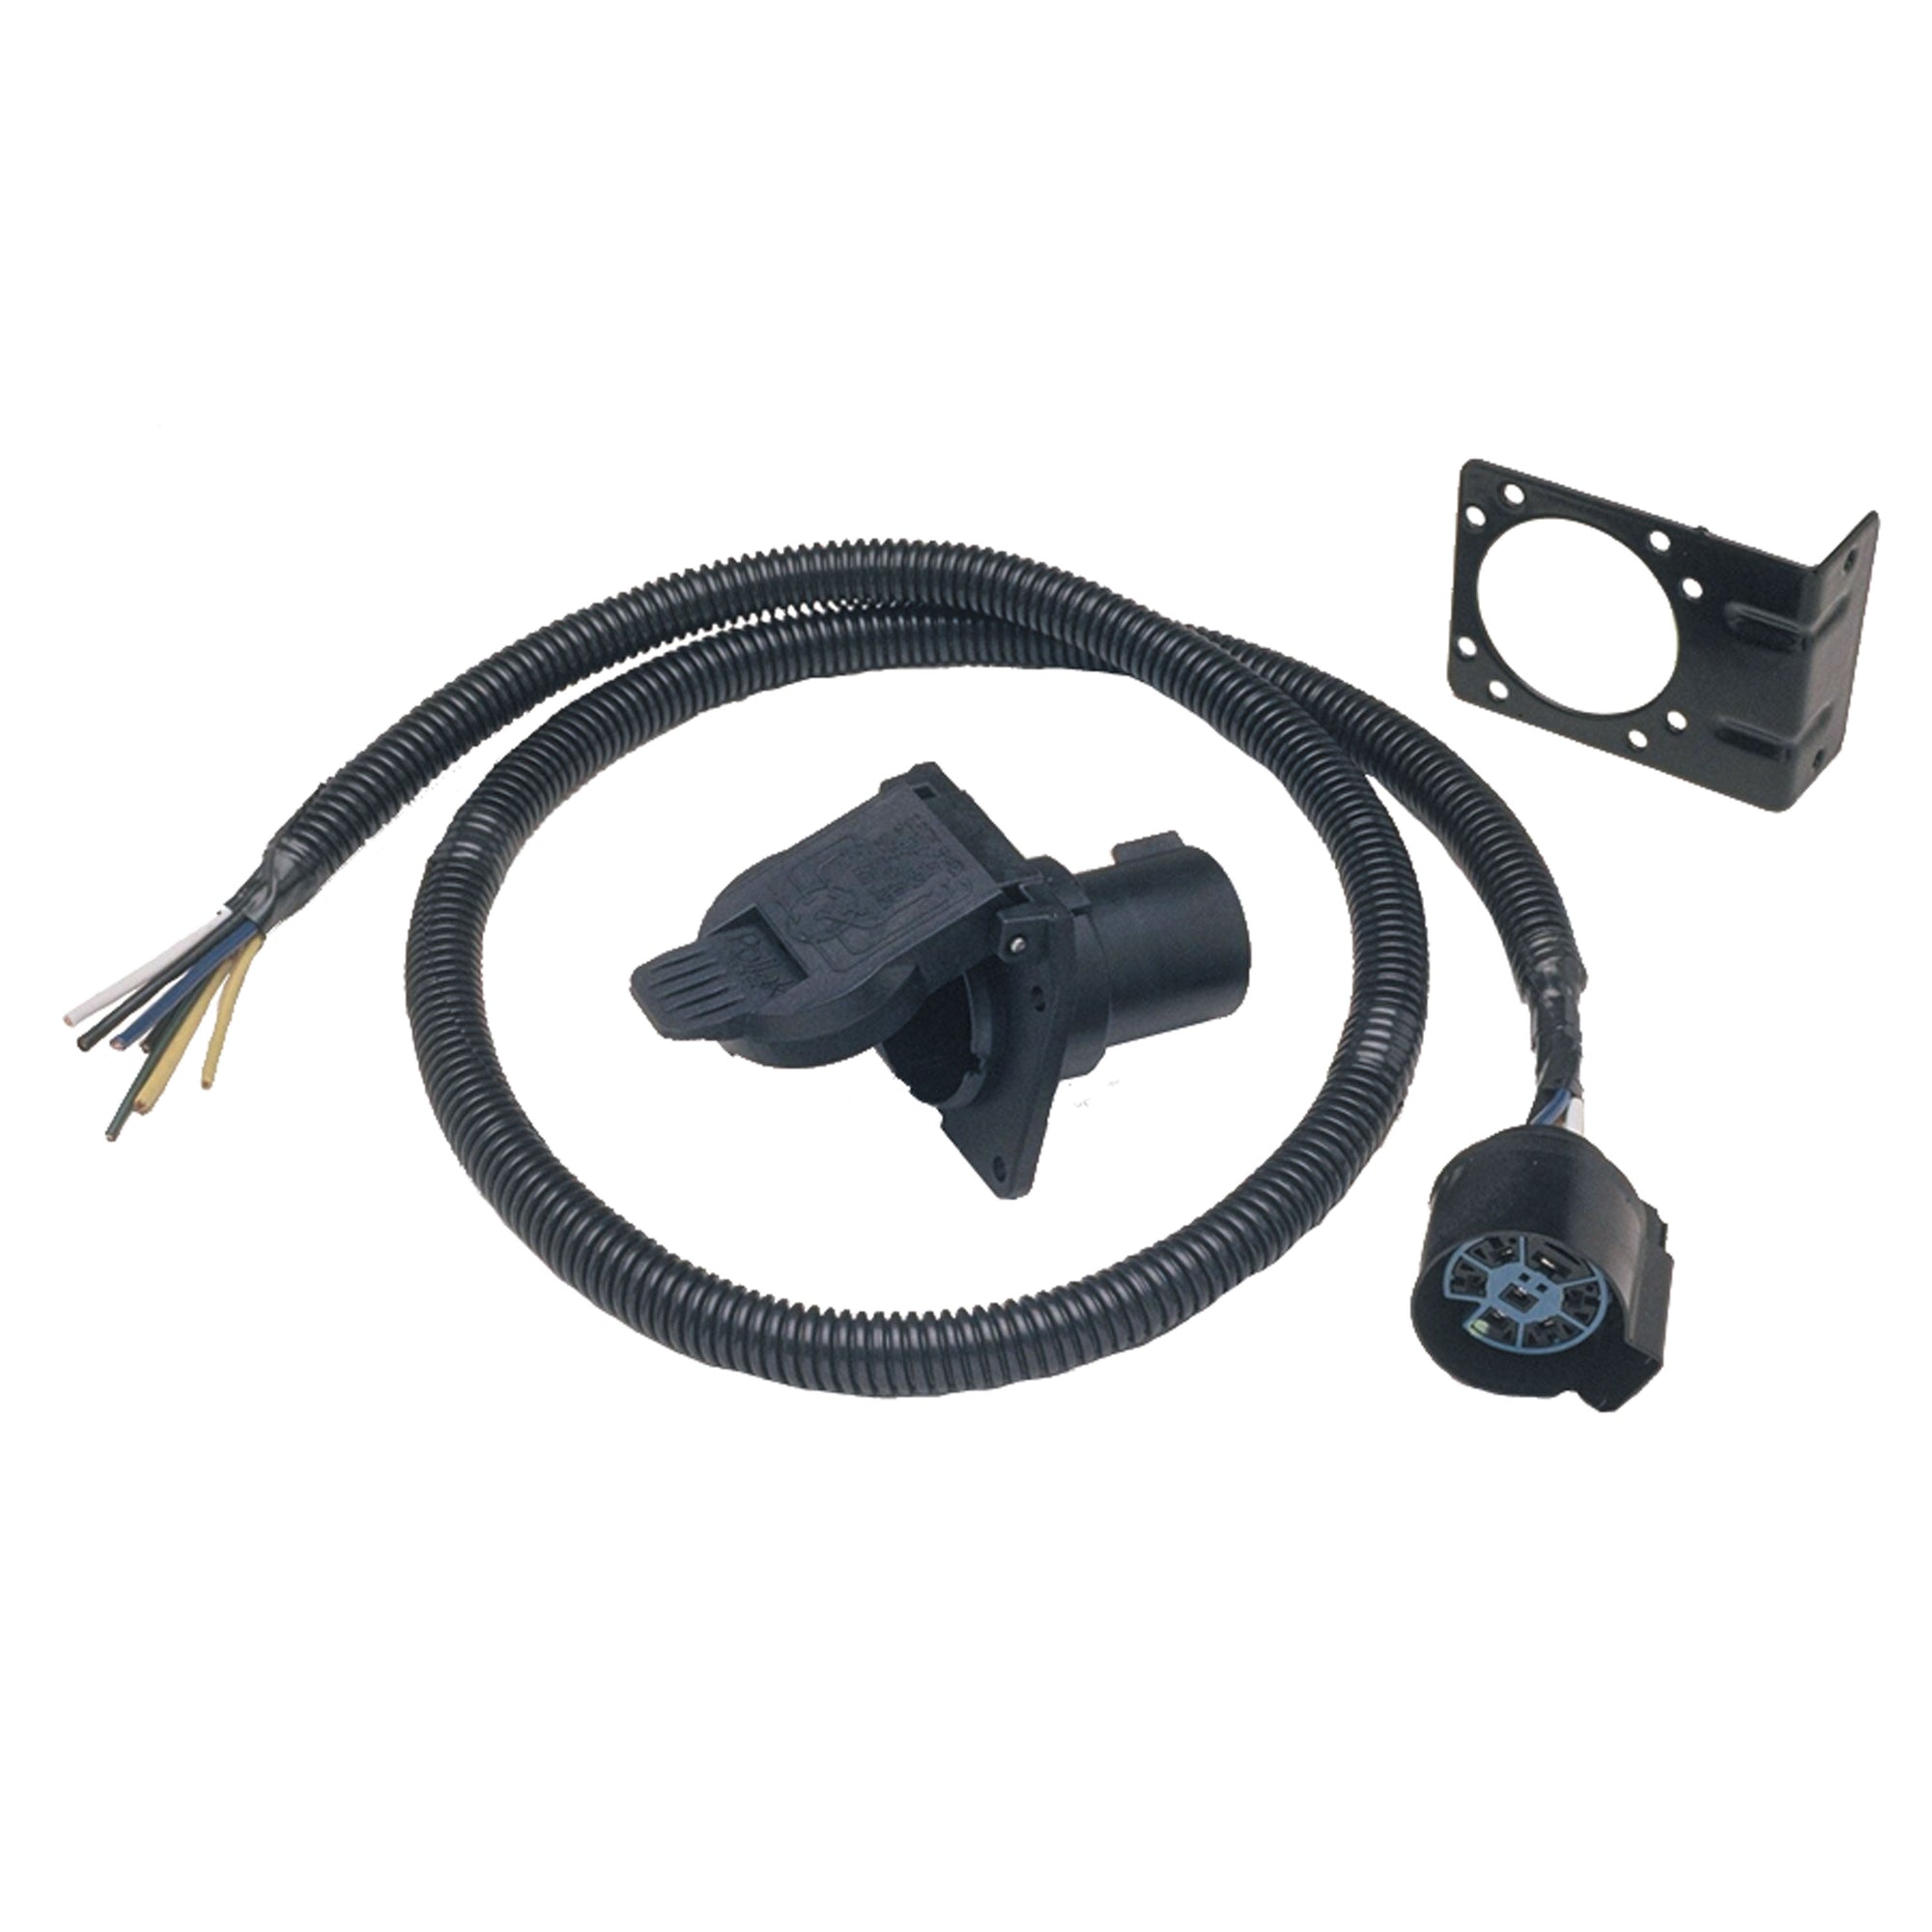 Pollak 11-898P 7-Way Socket/Cable/Bracket Kit - 4'